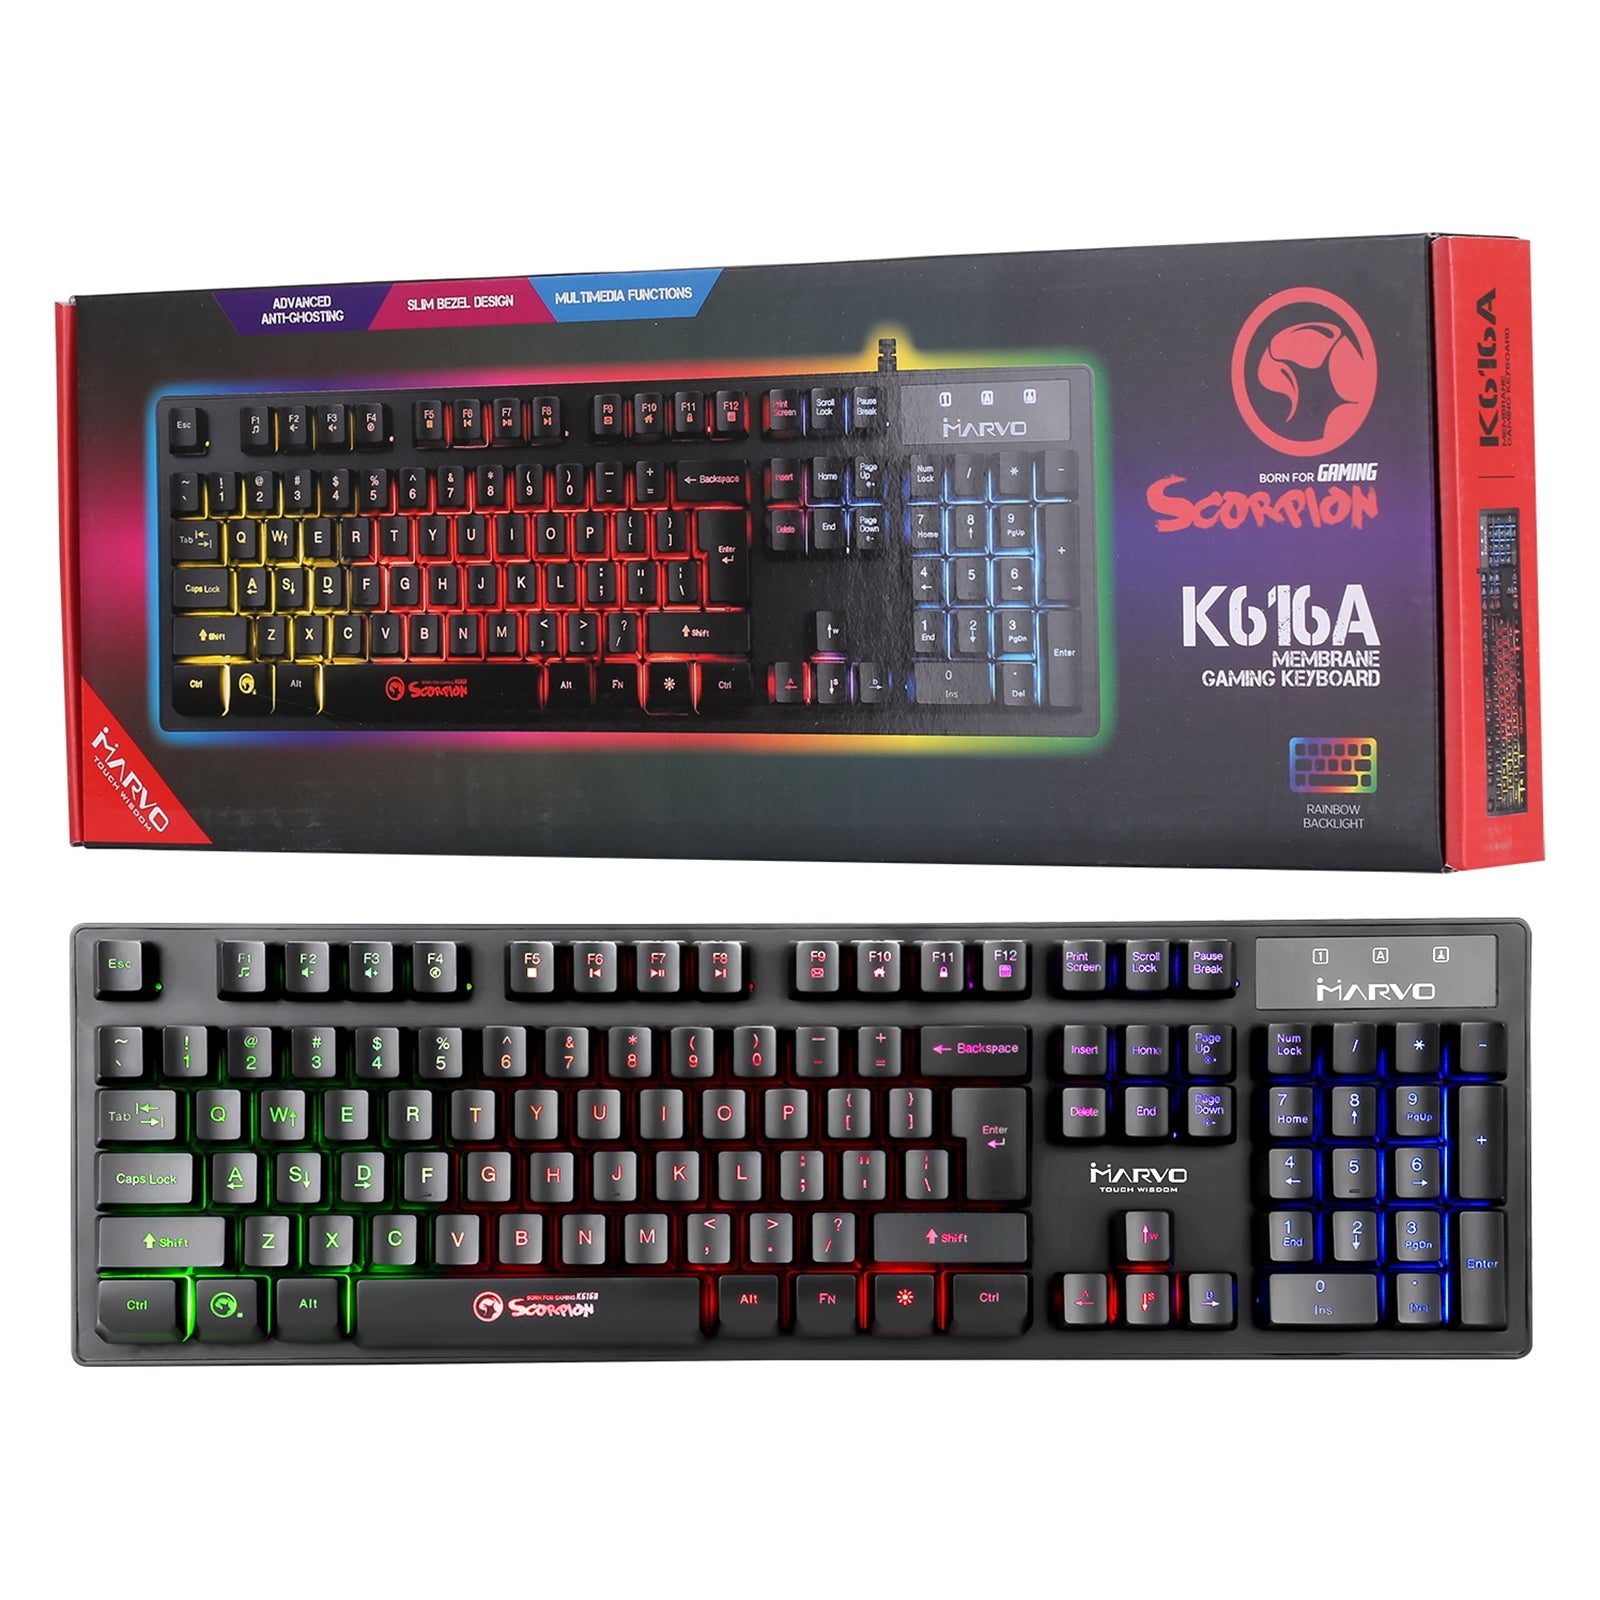 Marvo Scorpion K616A Gaming Keyboard, 3 Colour LED Backlit, USB 2.0, F | Back Office